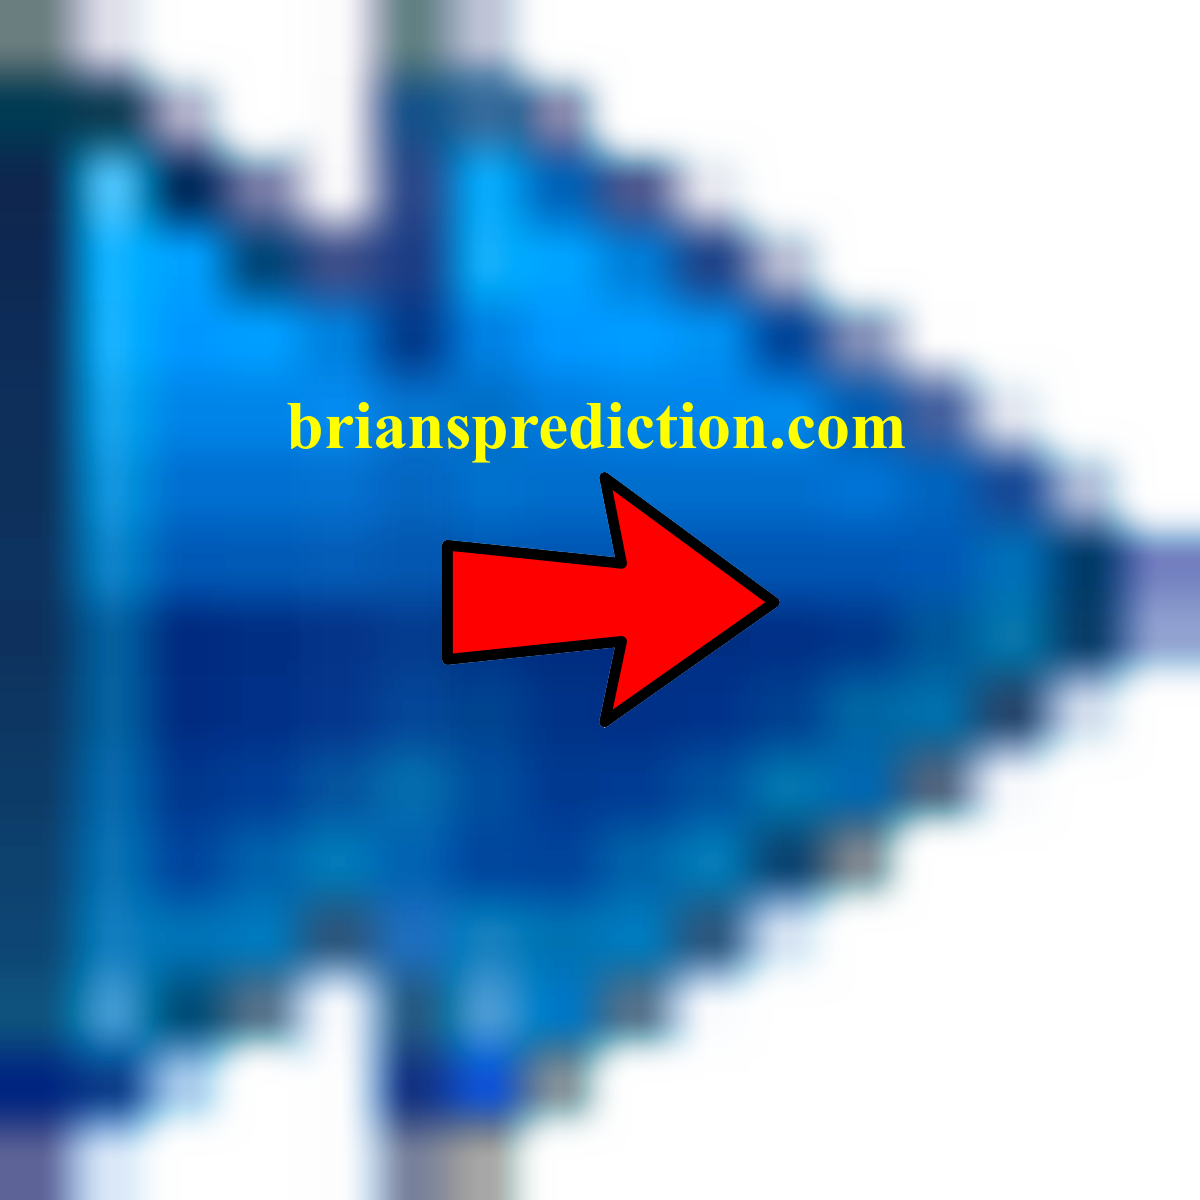 End Brian Ladd Pychic Prediction 2019
End Brian Ladd Pychic Prediction 2019
